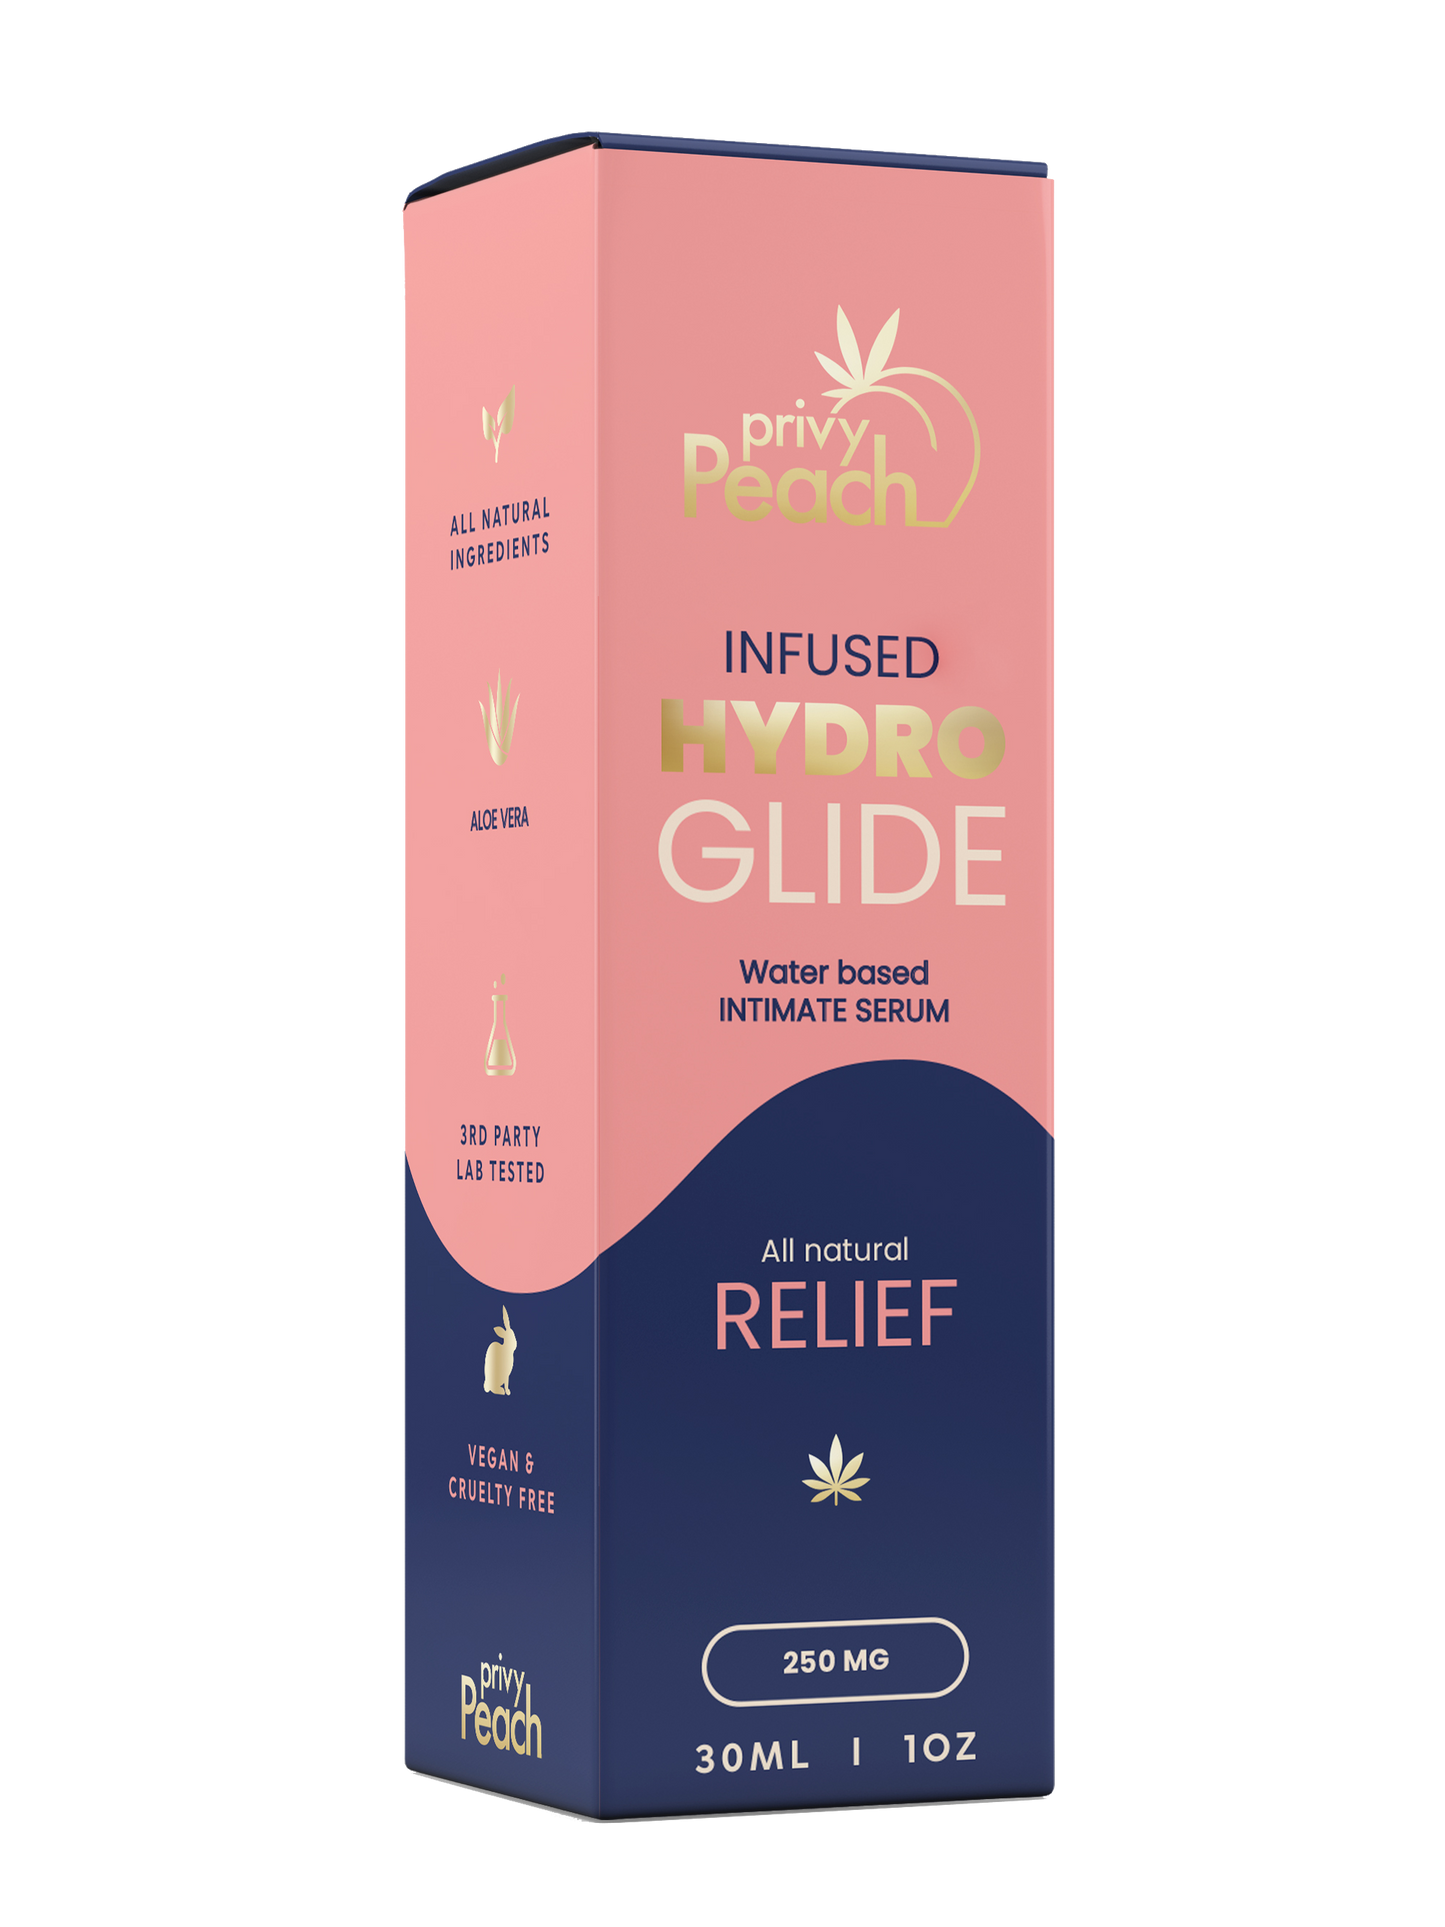 CBD Infused Hydro Glide Relief Intimate Serum